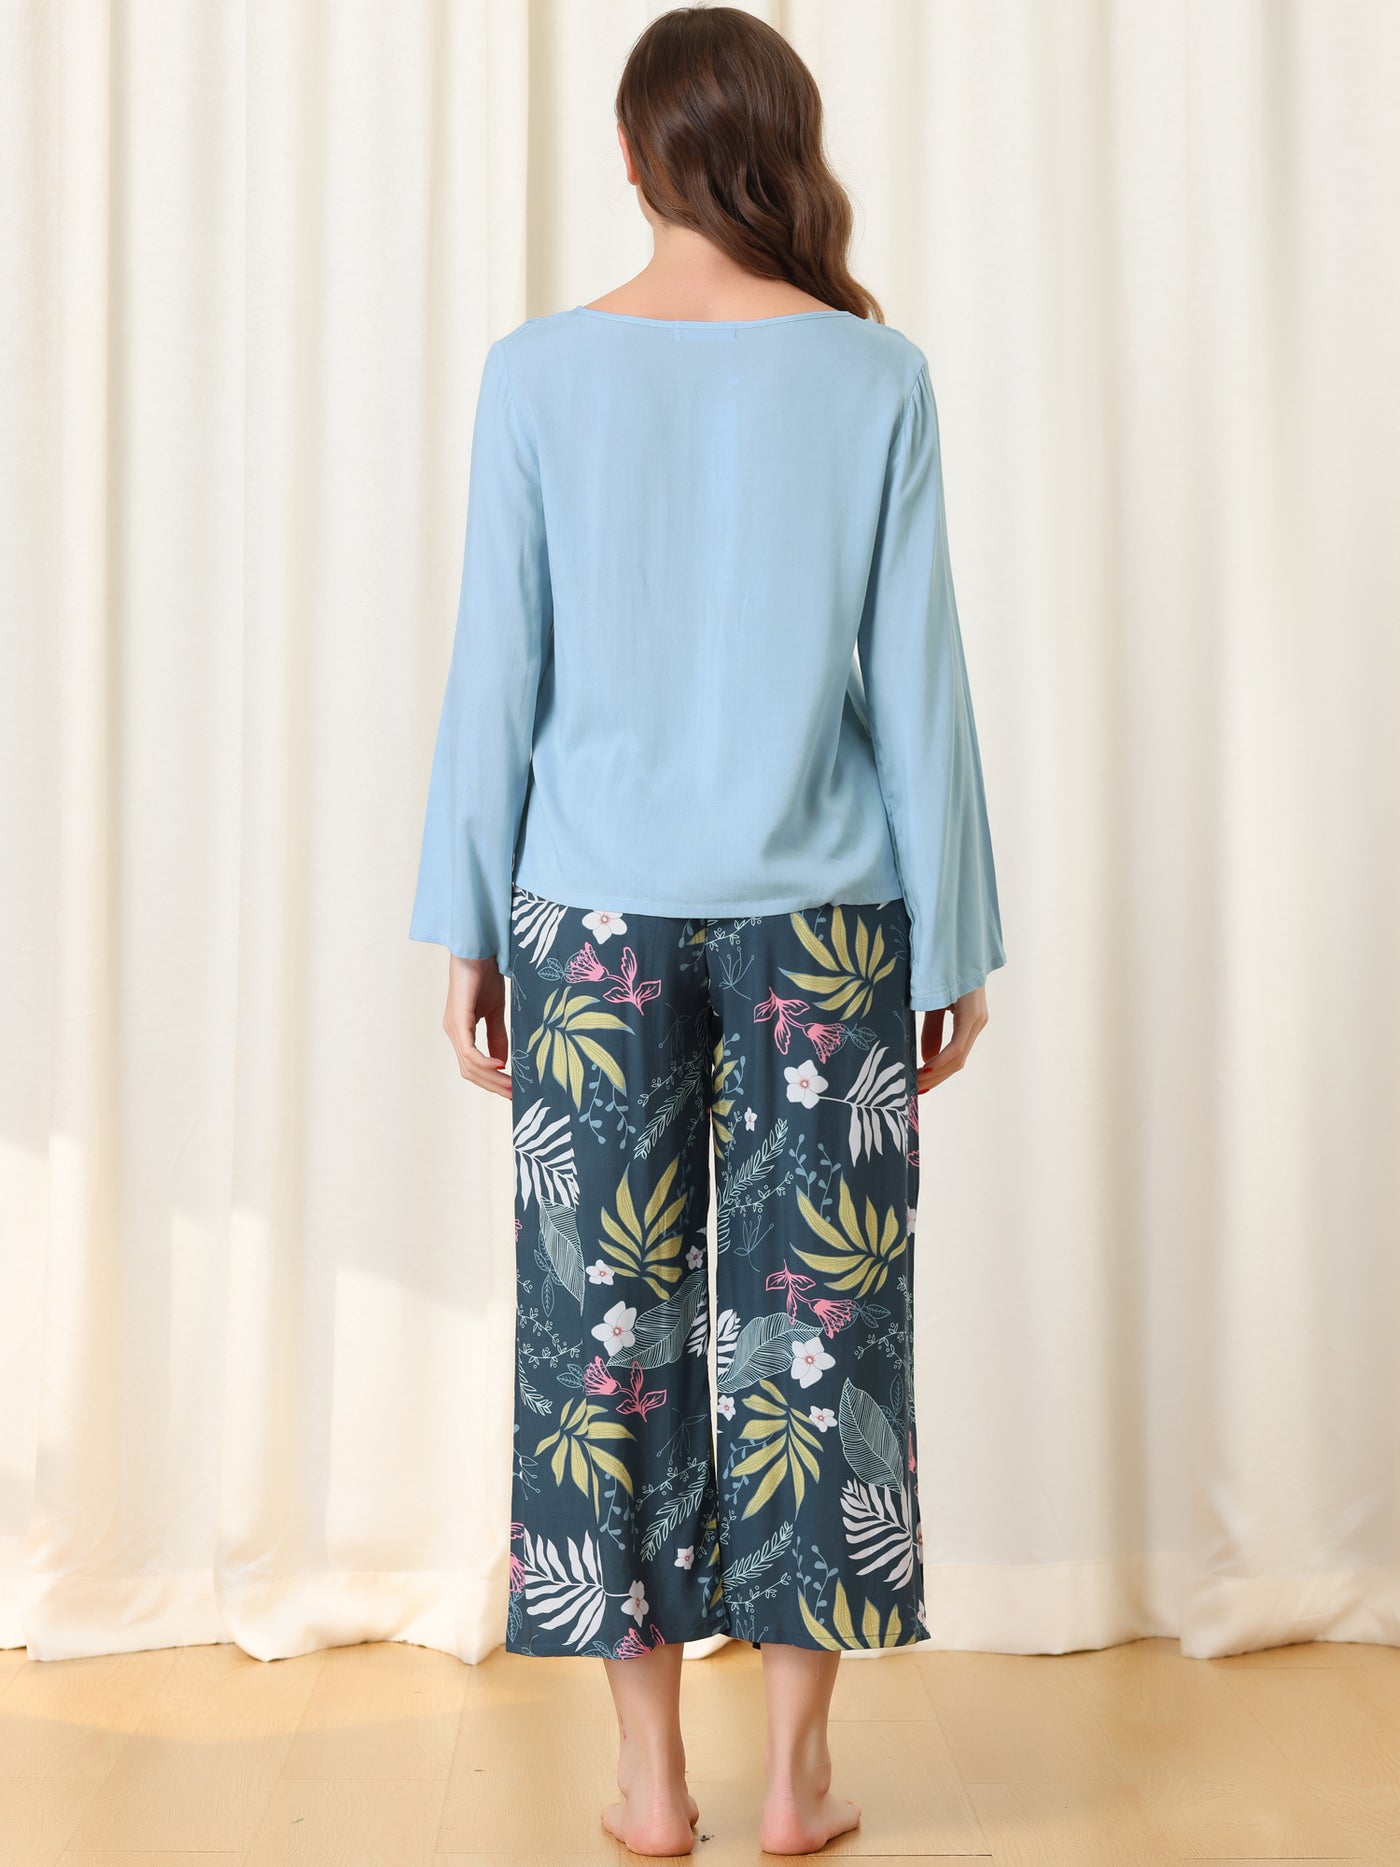 Bublédon Womens 2pcs Long Sleeve Capri Pants Floral Lounge Set Sleepwear Pajama Sets